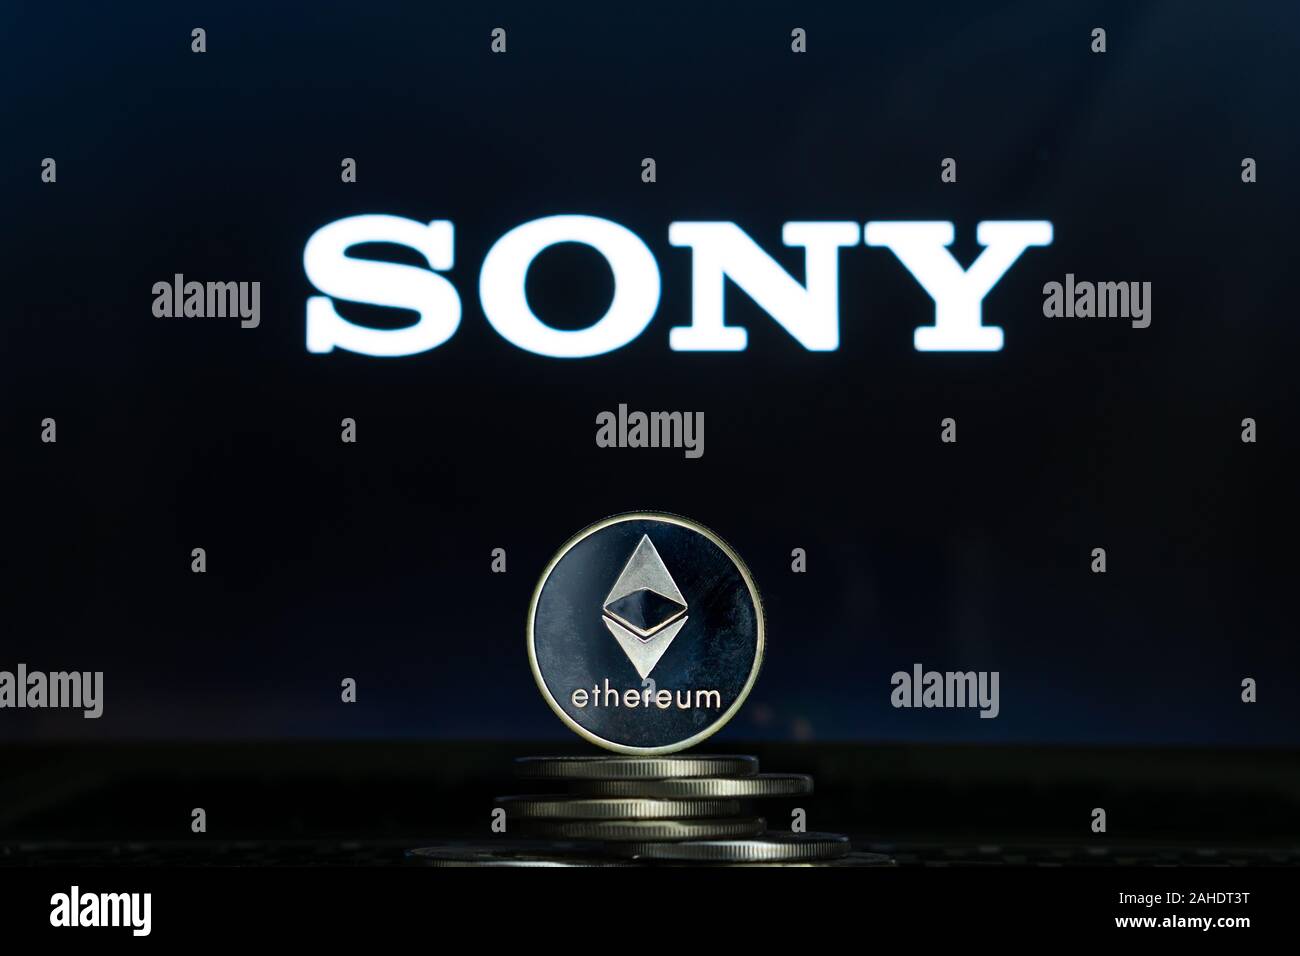 Ethereum coins with Sony logo on a laptop screen. Slovenia, Ljubljana - 02 24 2019 Stock Photo